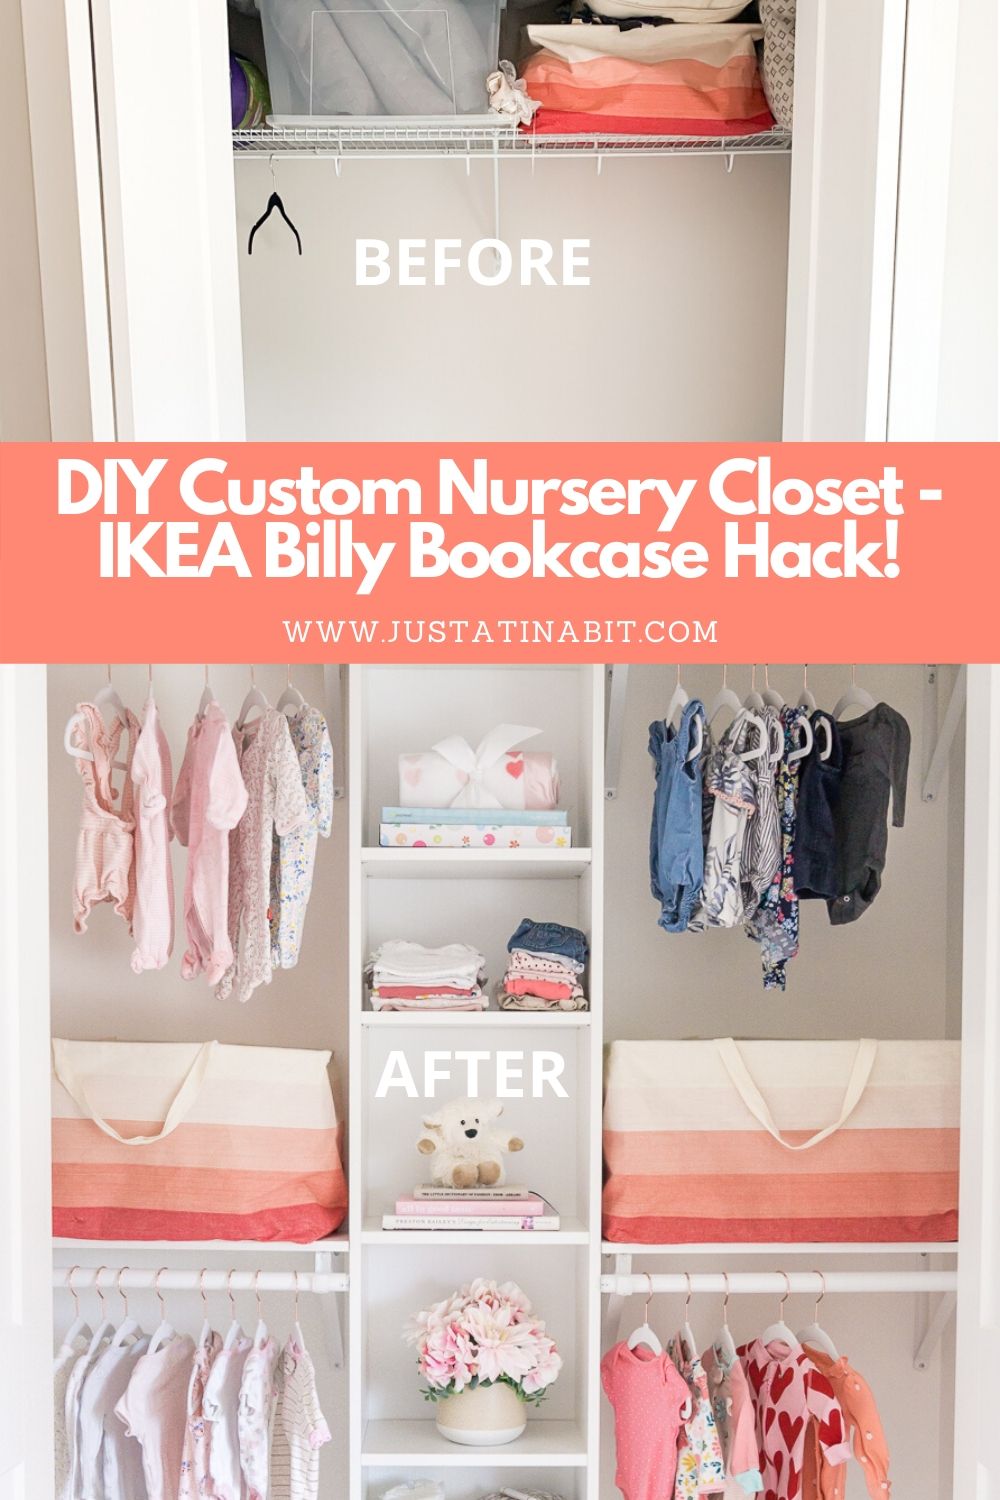 DIY customer nursery closet using an IKEA Billy Bookcase hack